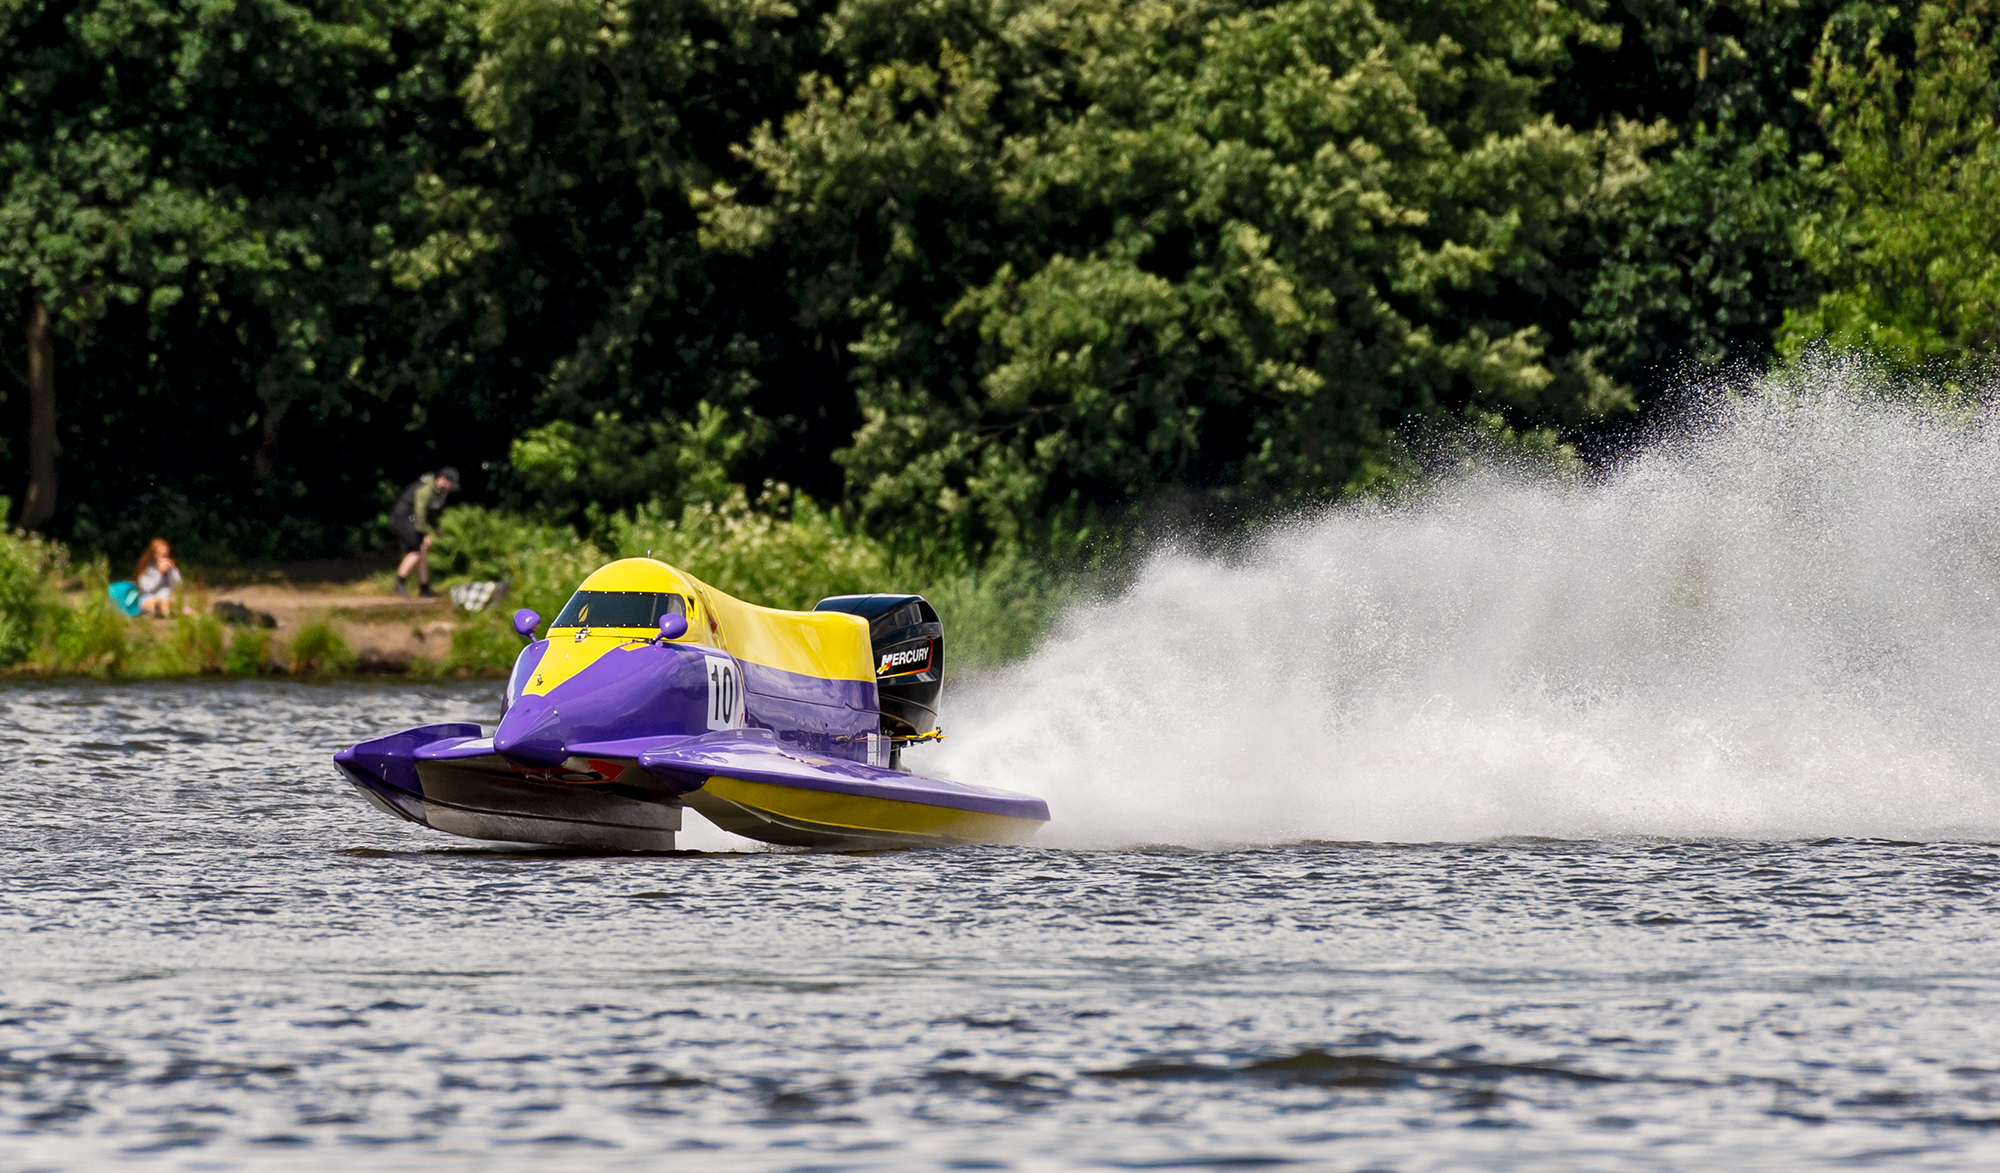 carr mill dam powerboat racing 2022 dates